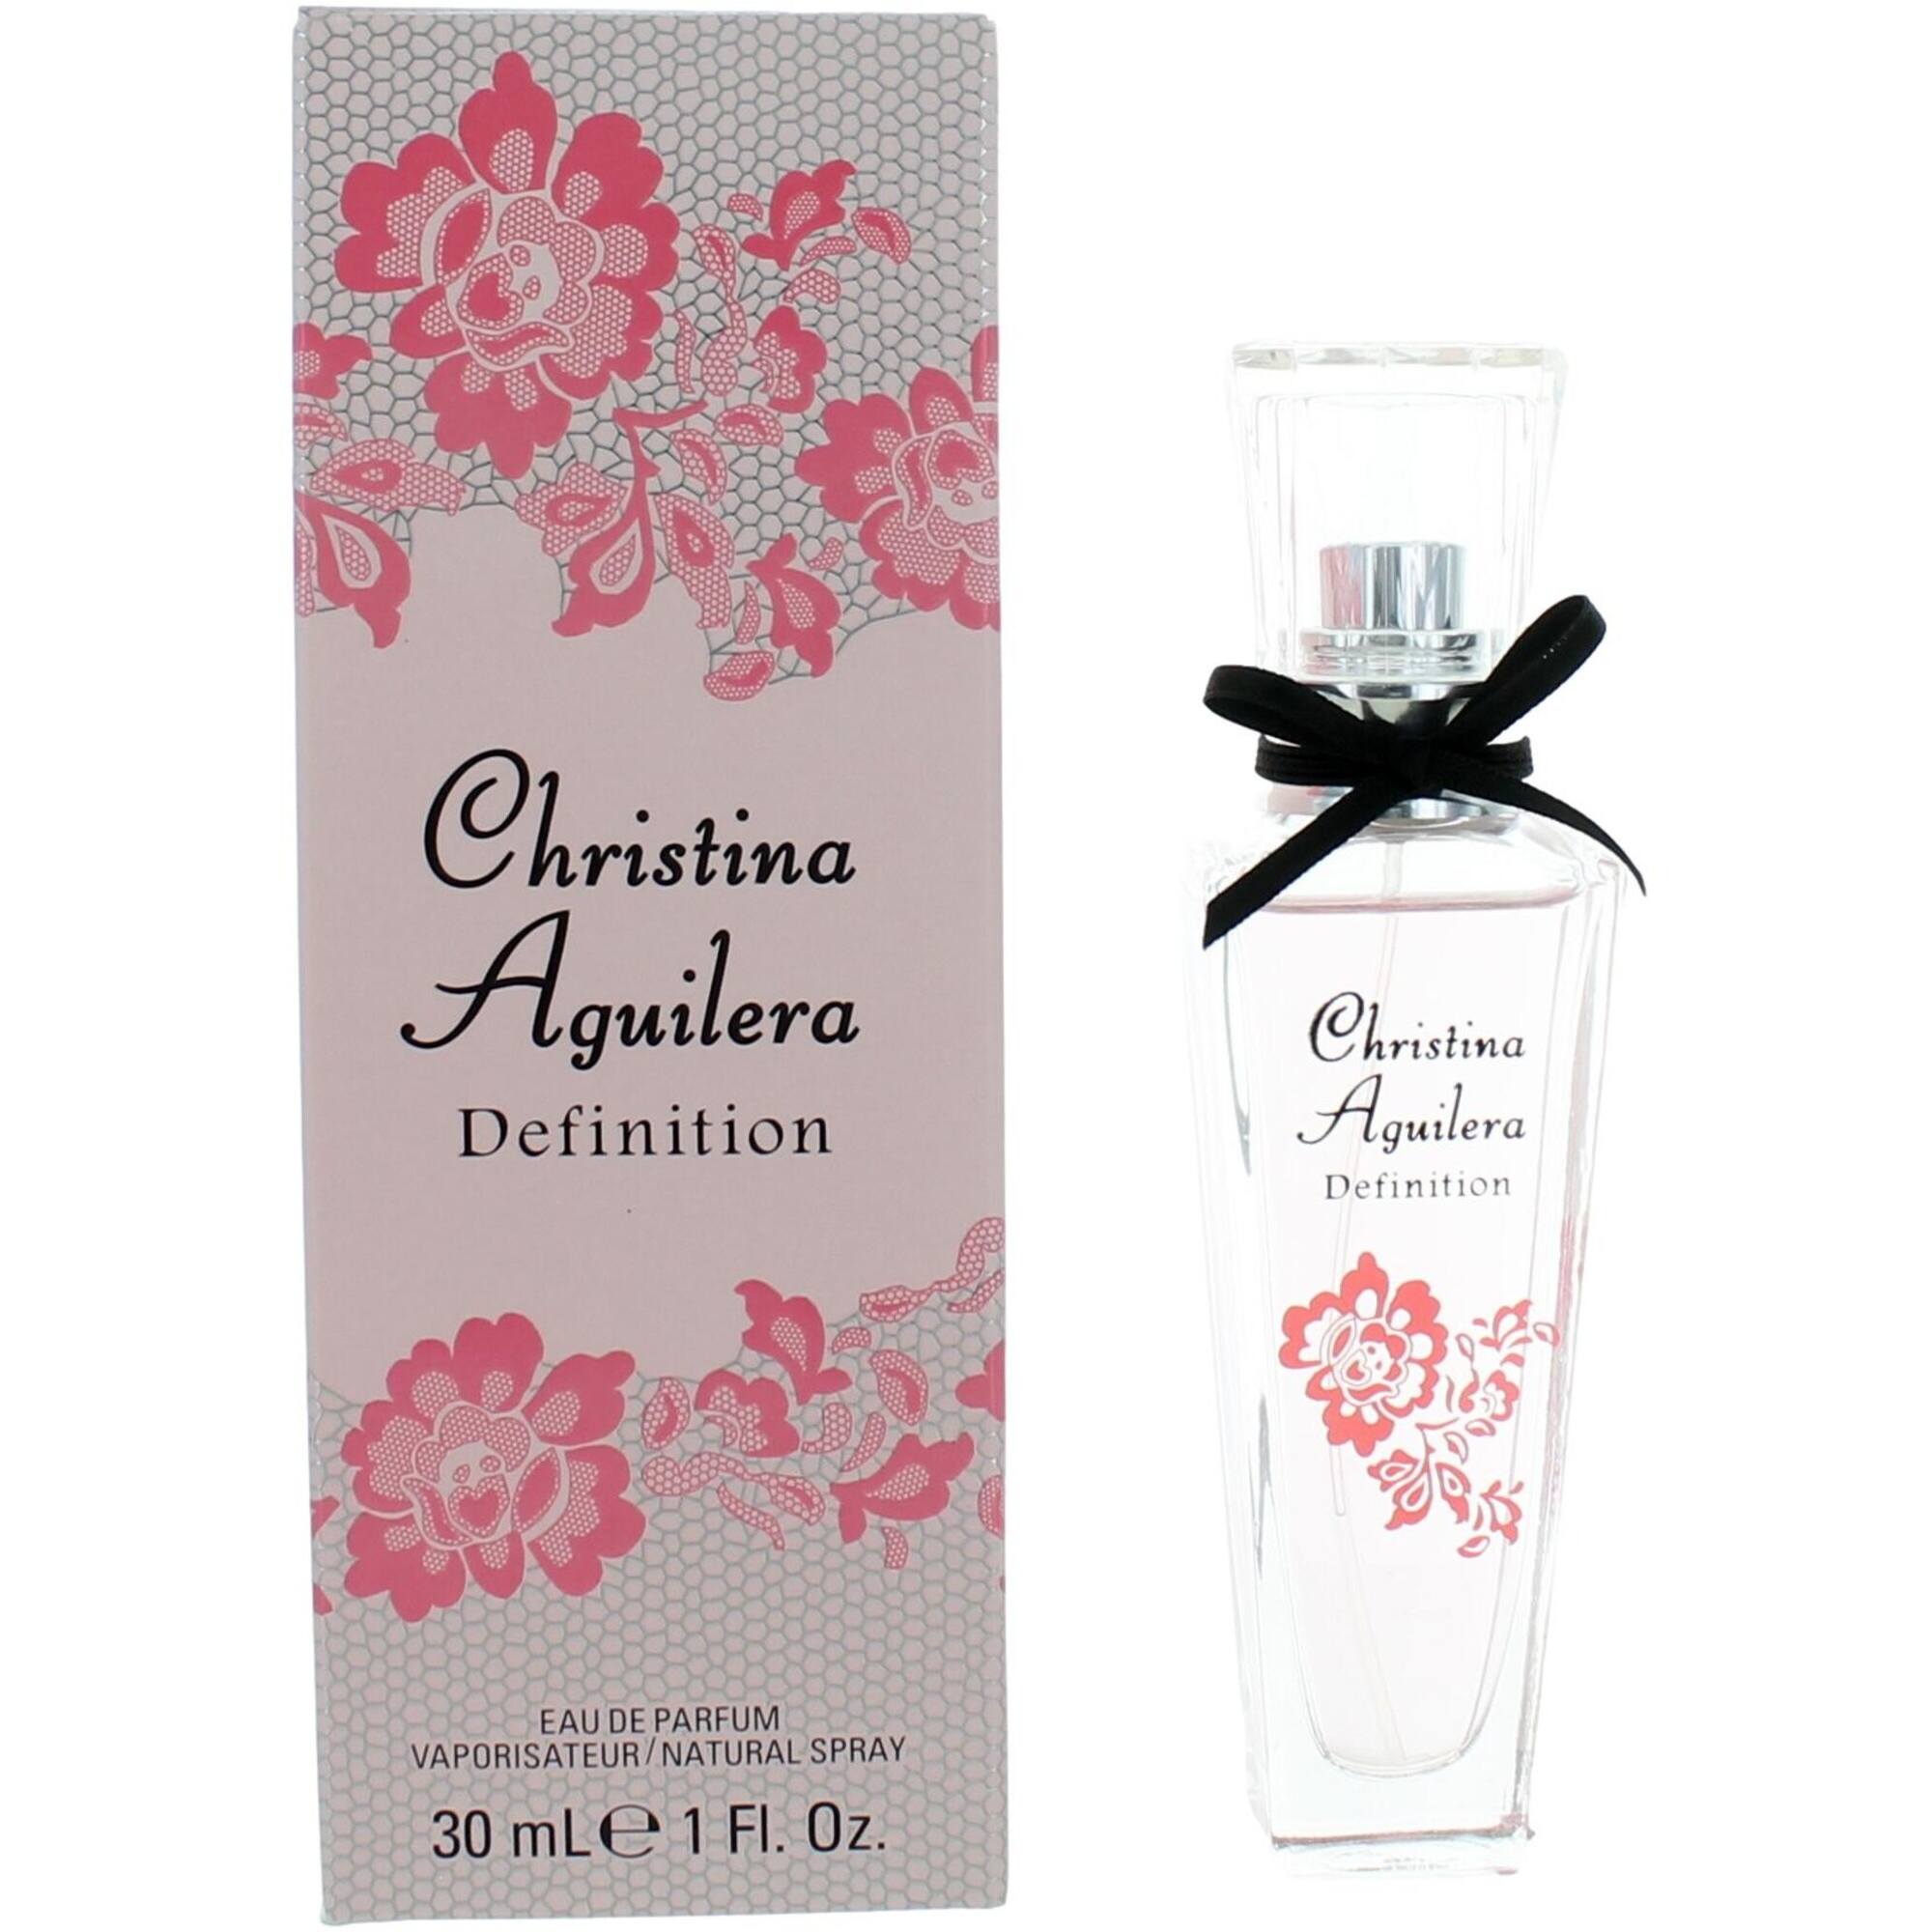 Christina Aguilera Women's Eau De Parfum Spray - Definition Delicate Natural, 1 oz